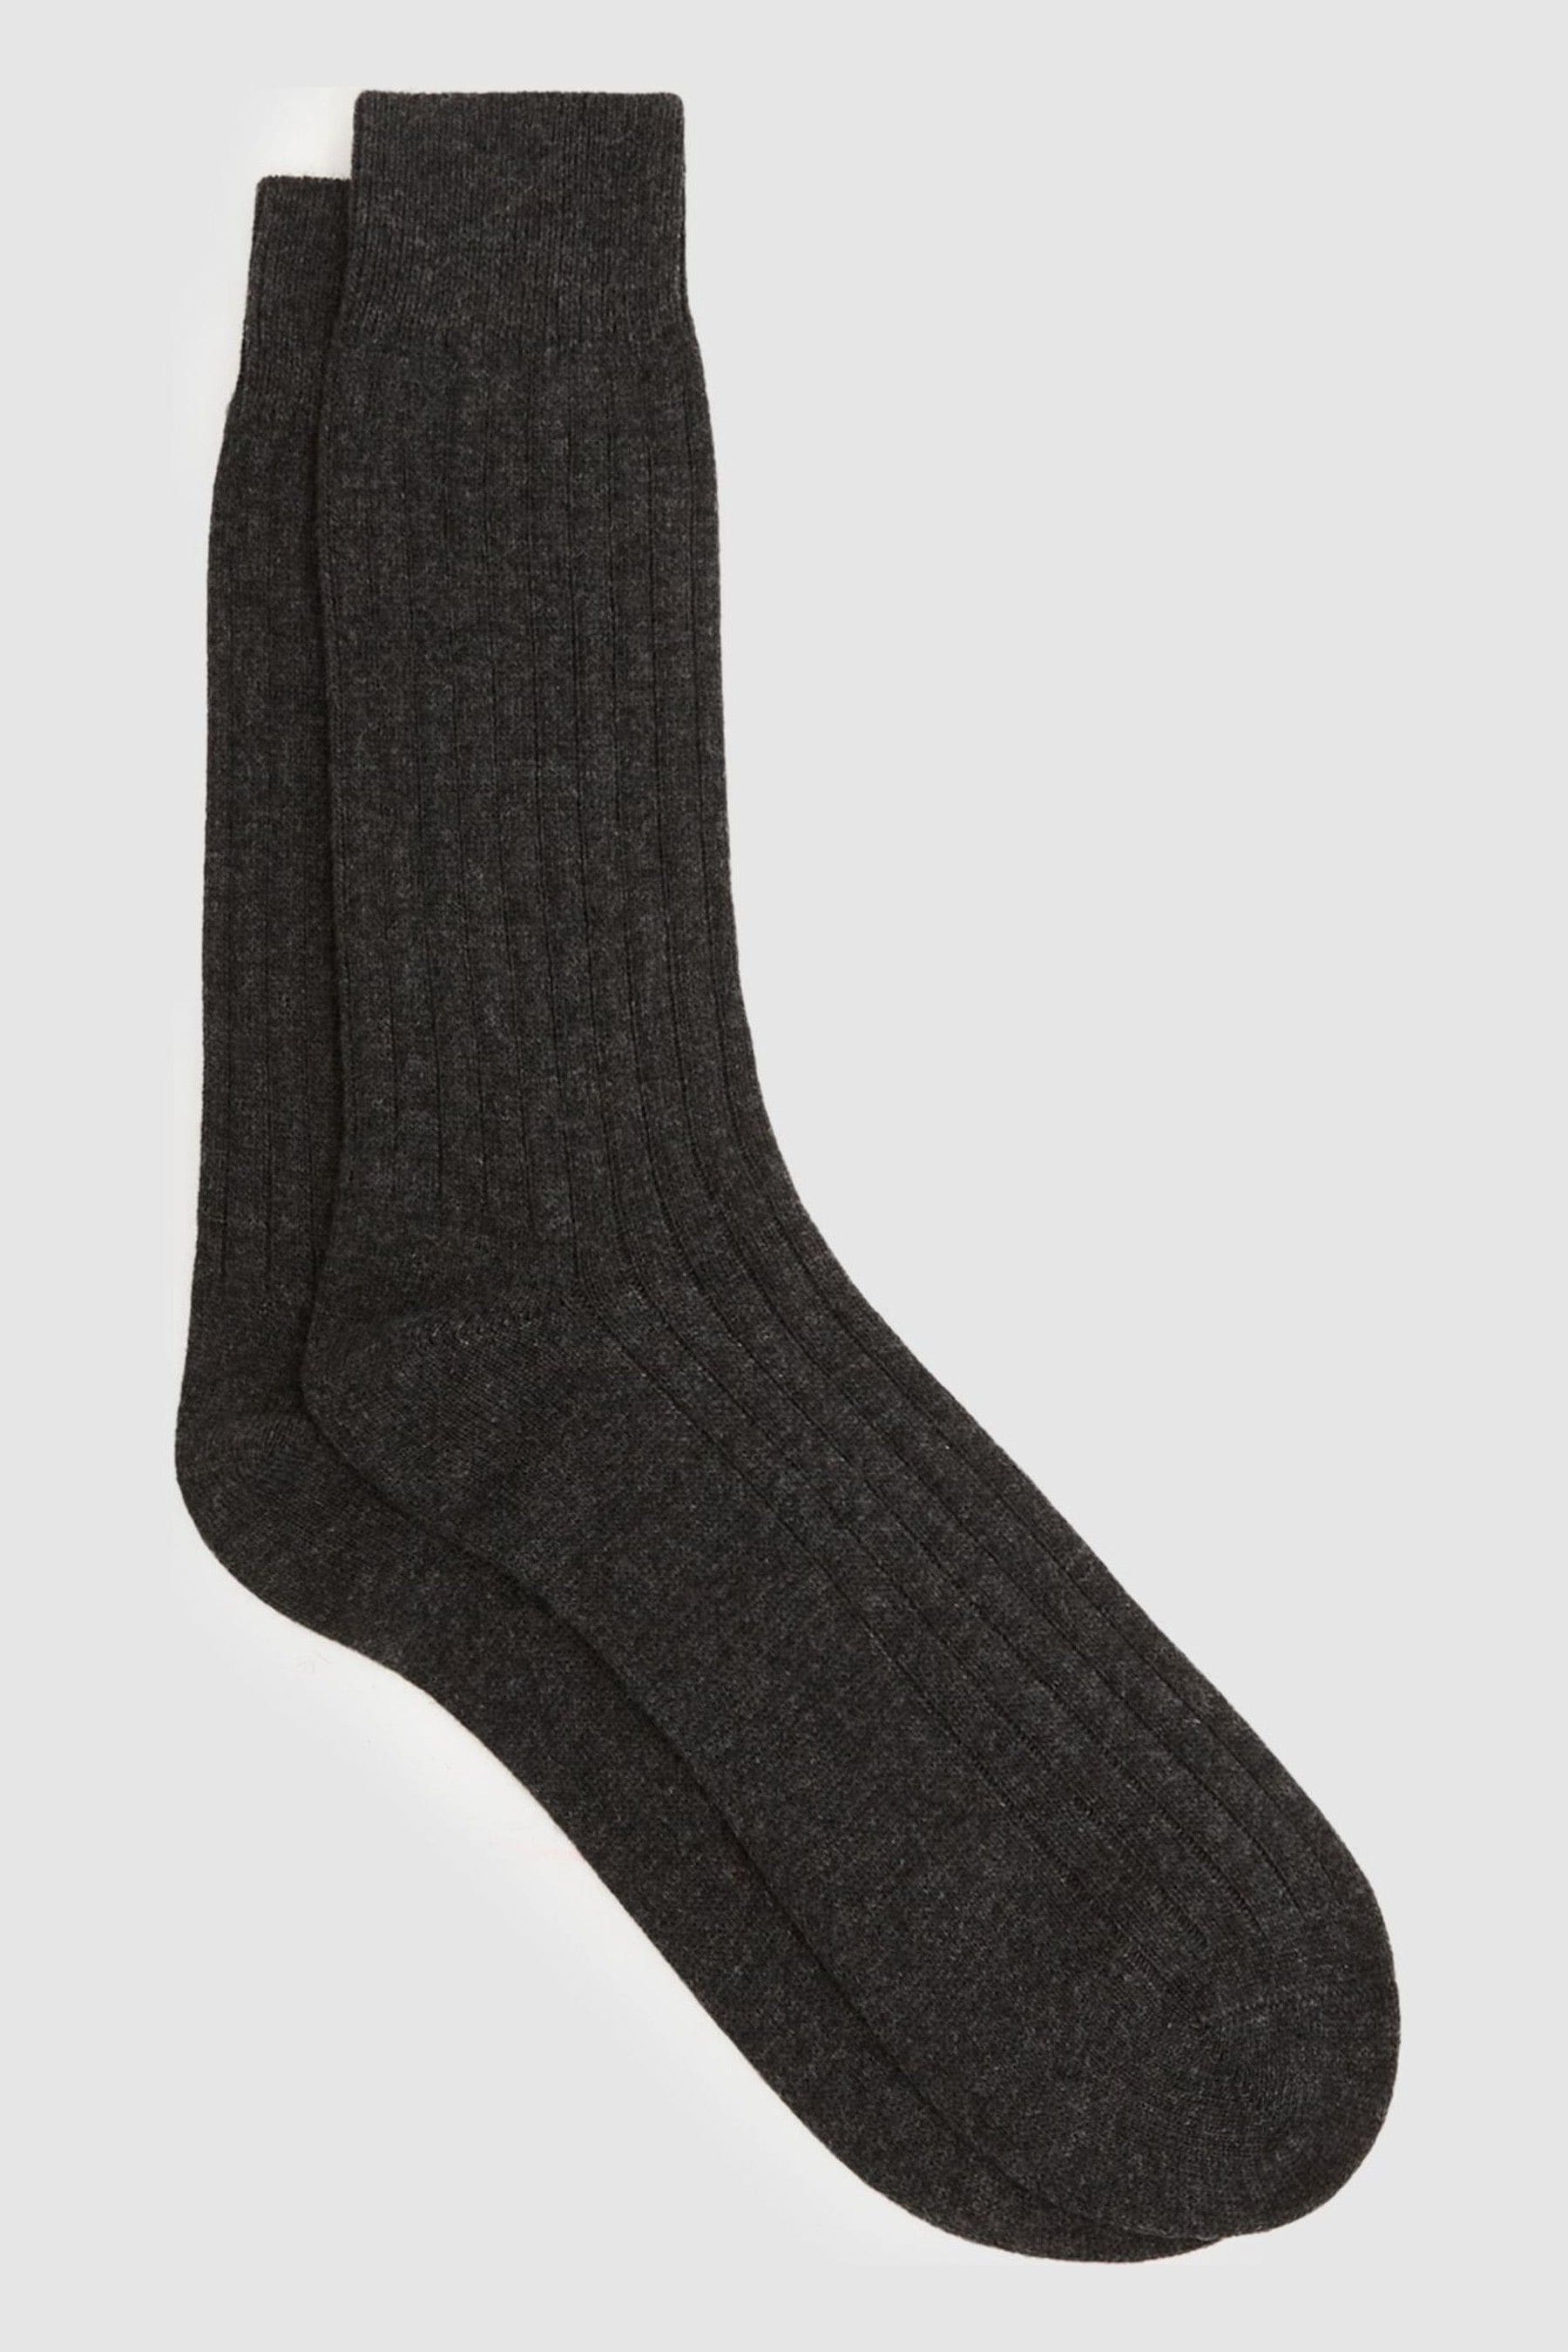 Cirby Charcoal Socks - Dark...